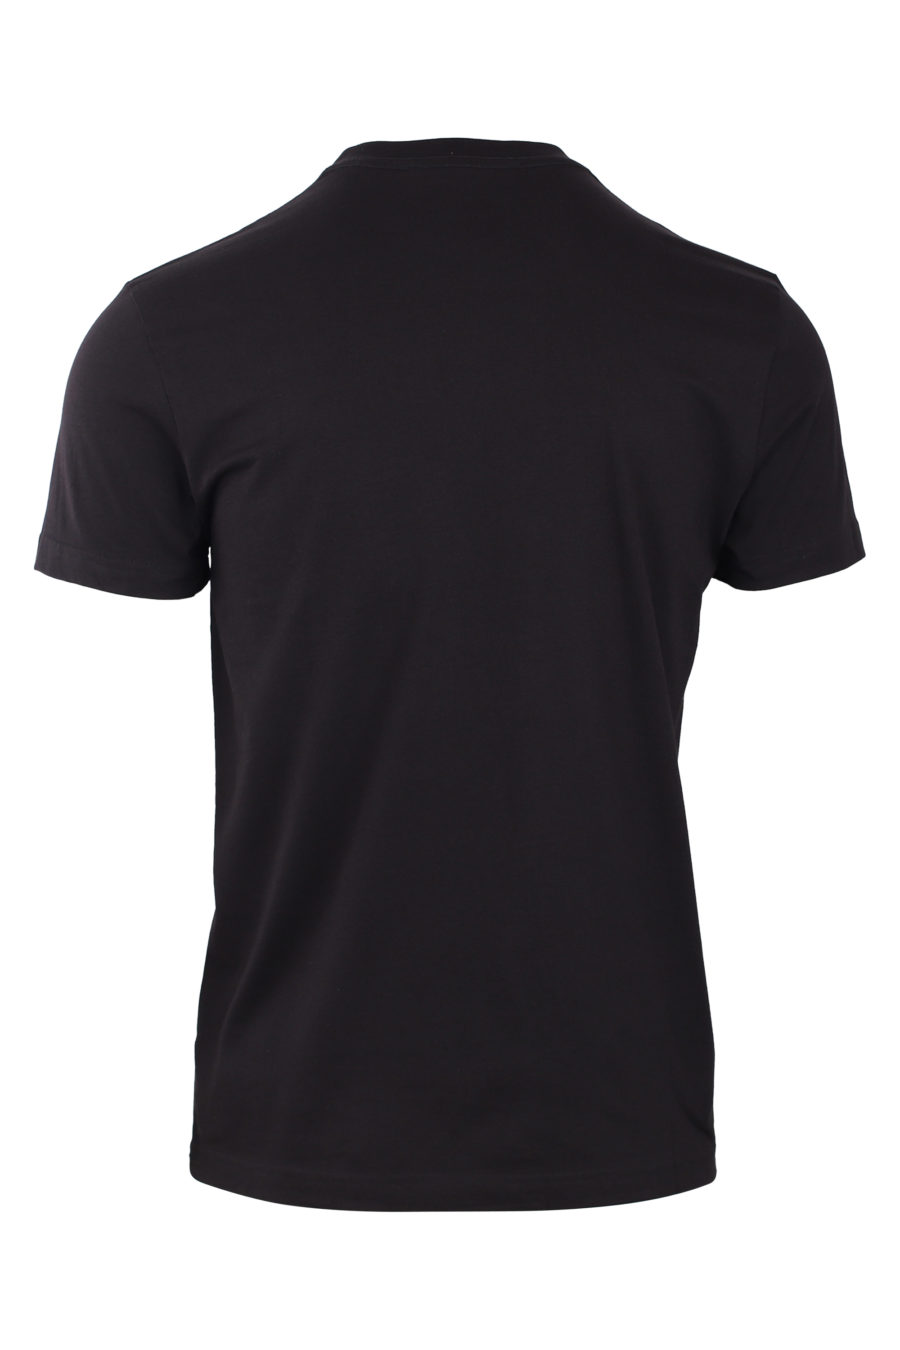 Camiseta negra con logo en triangulo pequeño - IMG 0787